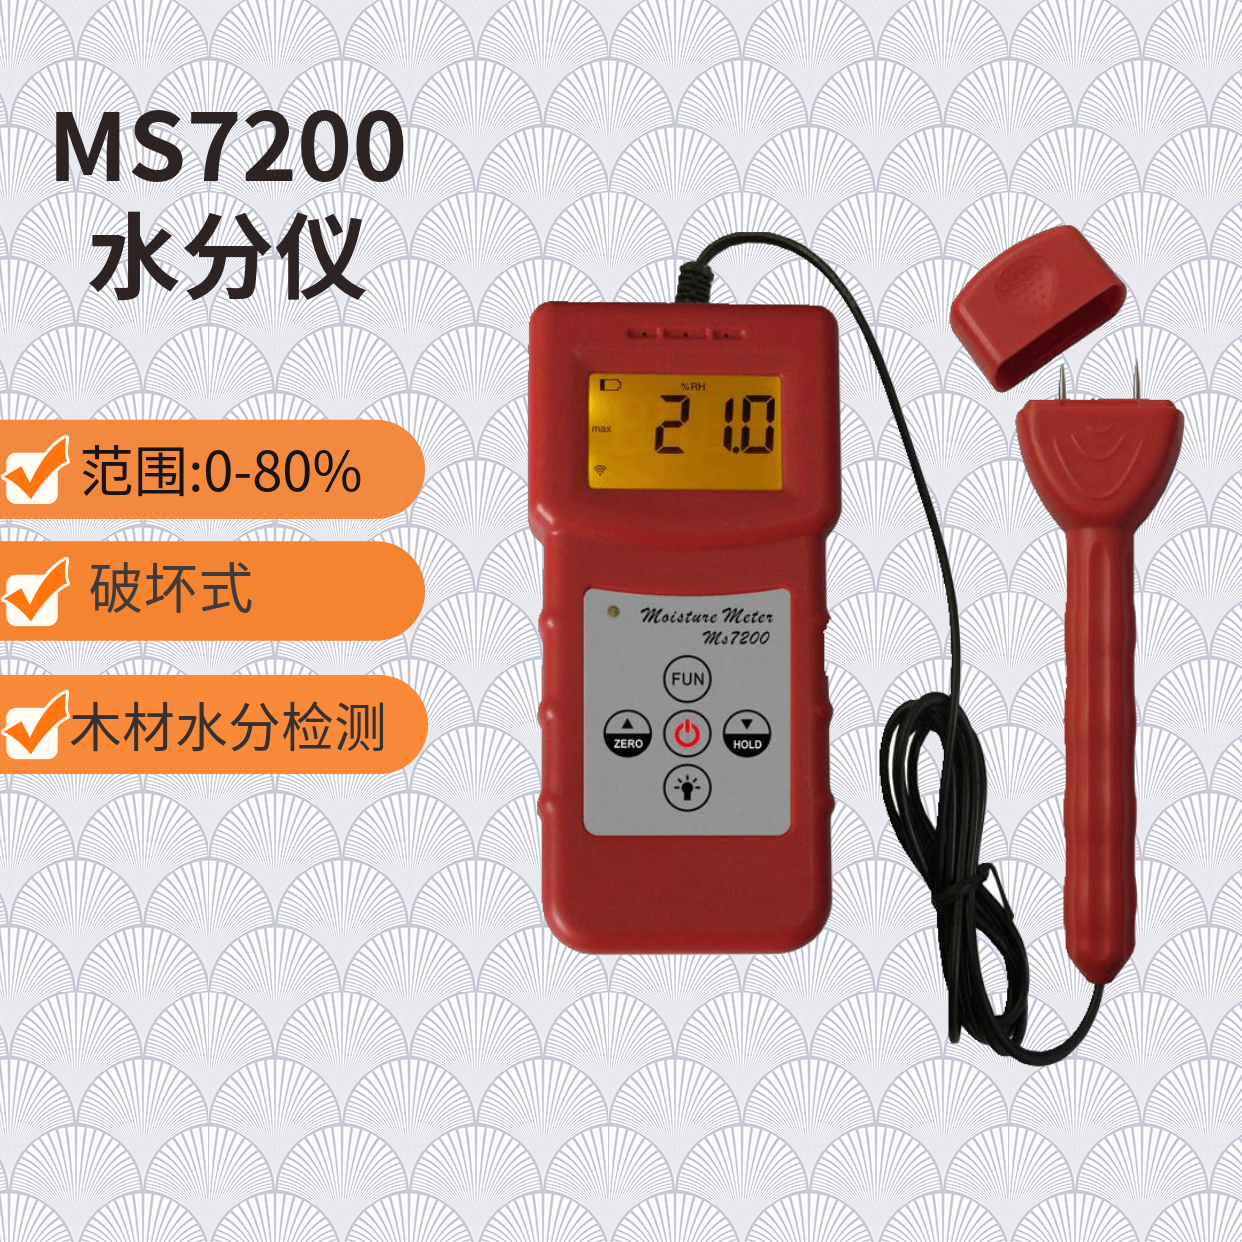 MS7200针式水分仪